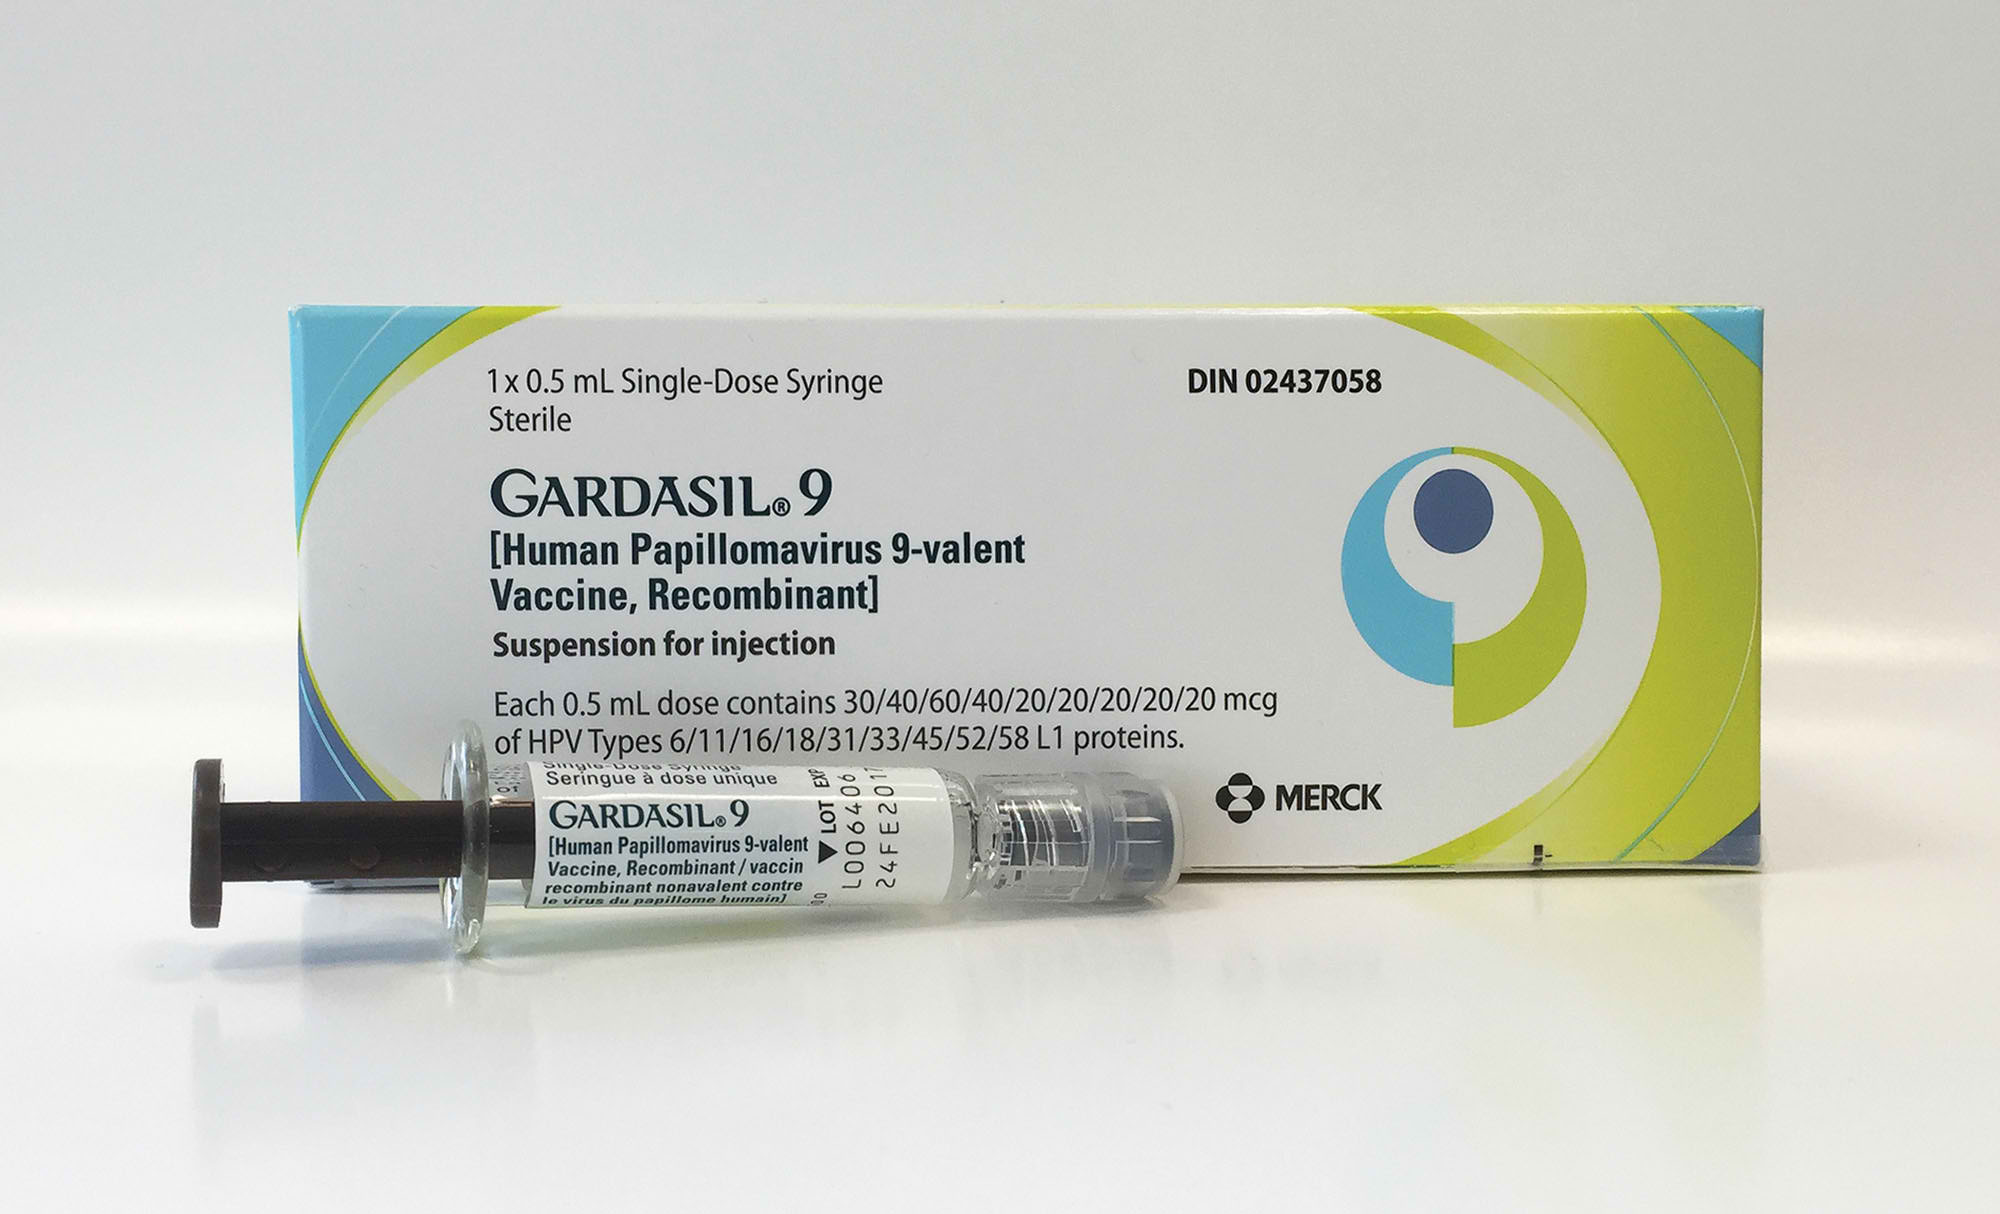 Gardasil 9 Package and syringe